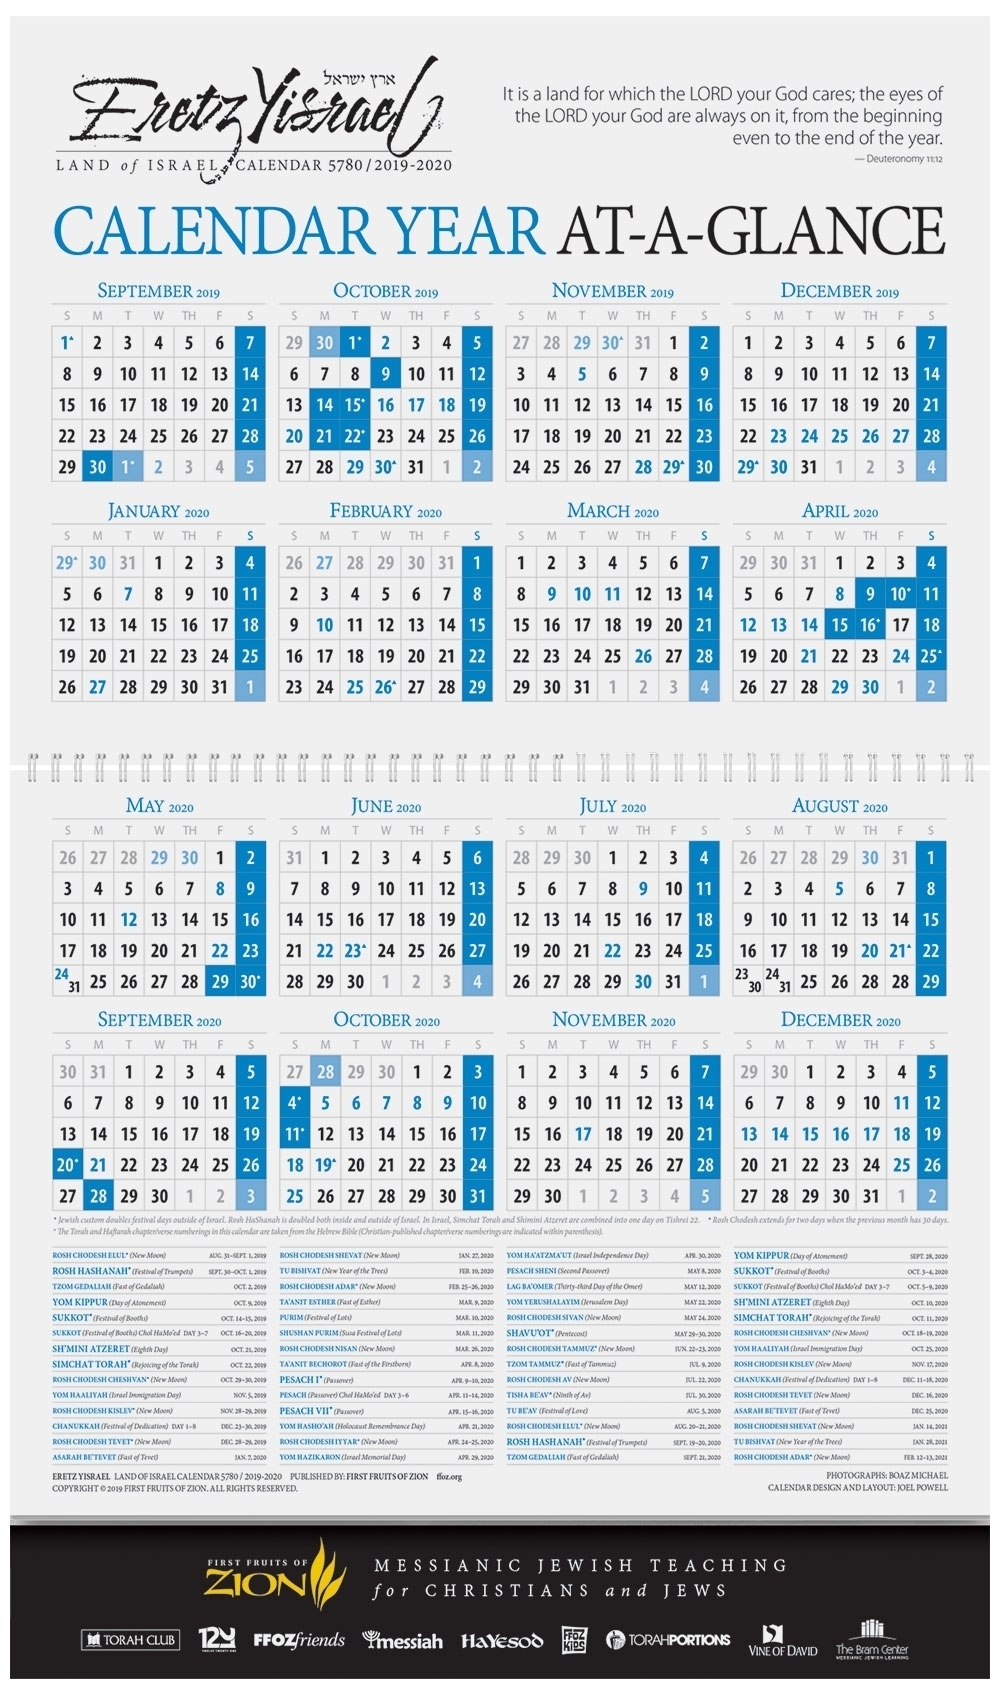 Weekly Torah Parsha Calendar For 2019/2020 - Calendar in Printable Torah Portion Reading Schedule